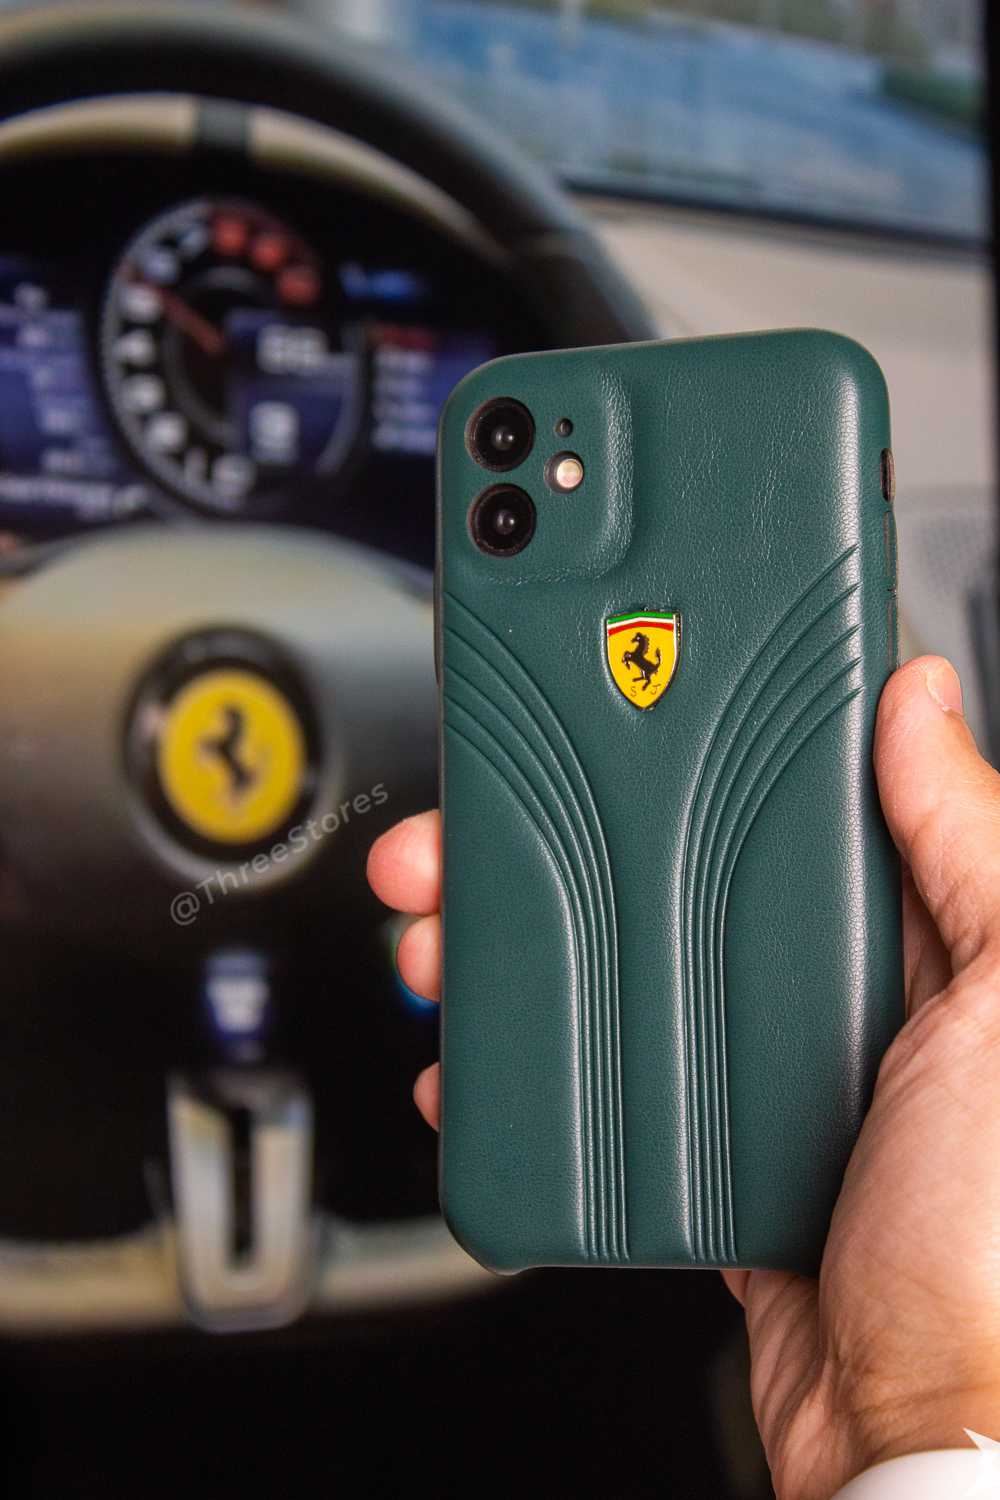 Ferrari Leather Case iPhone 12